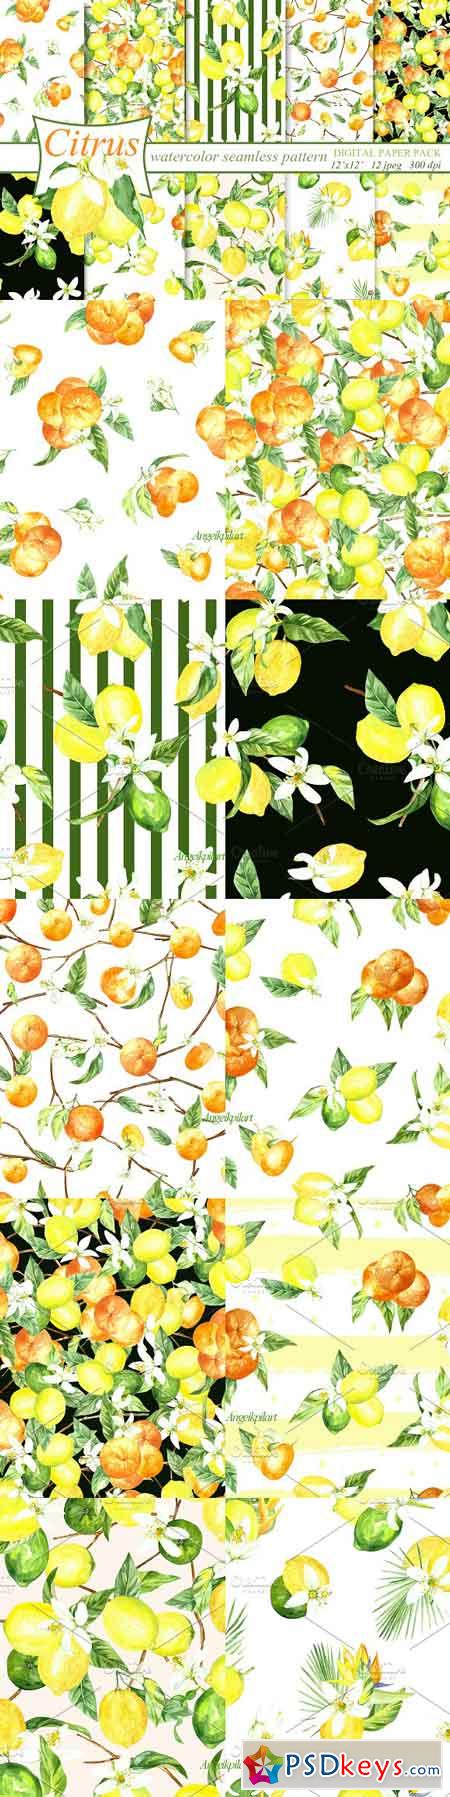 citrus watercolor seamless pattern 1592414